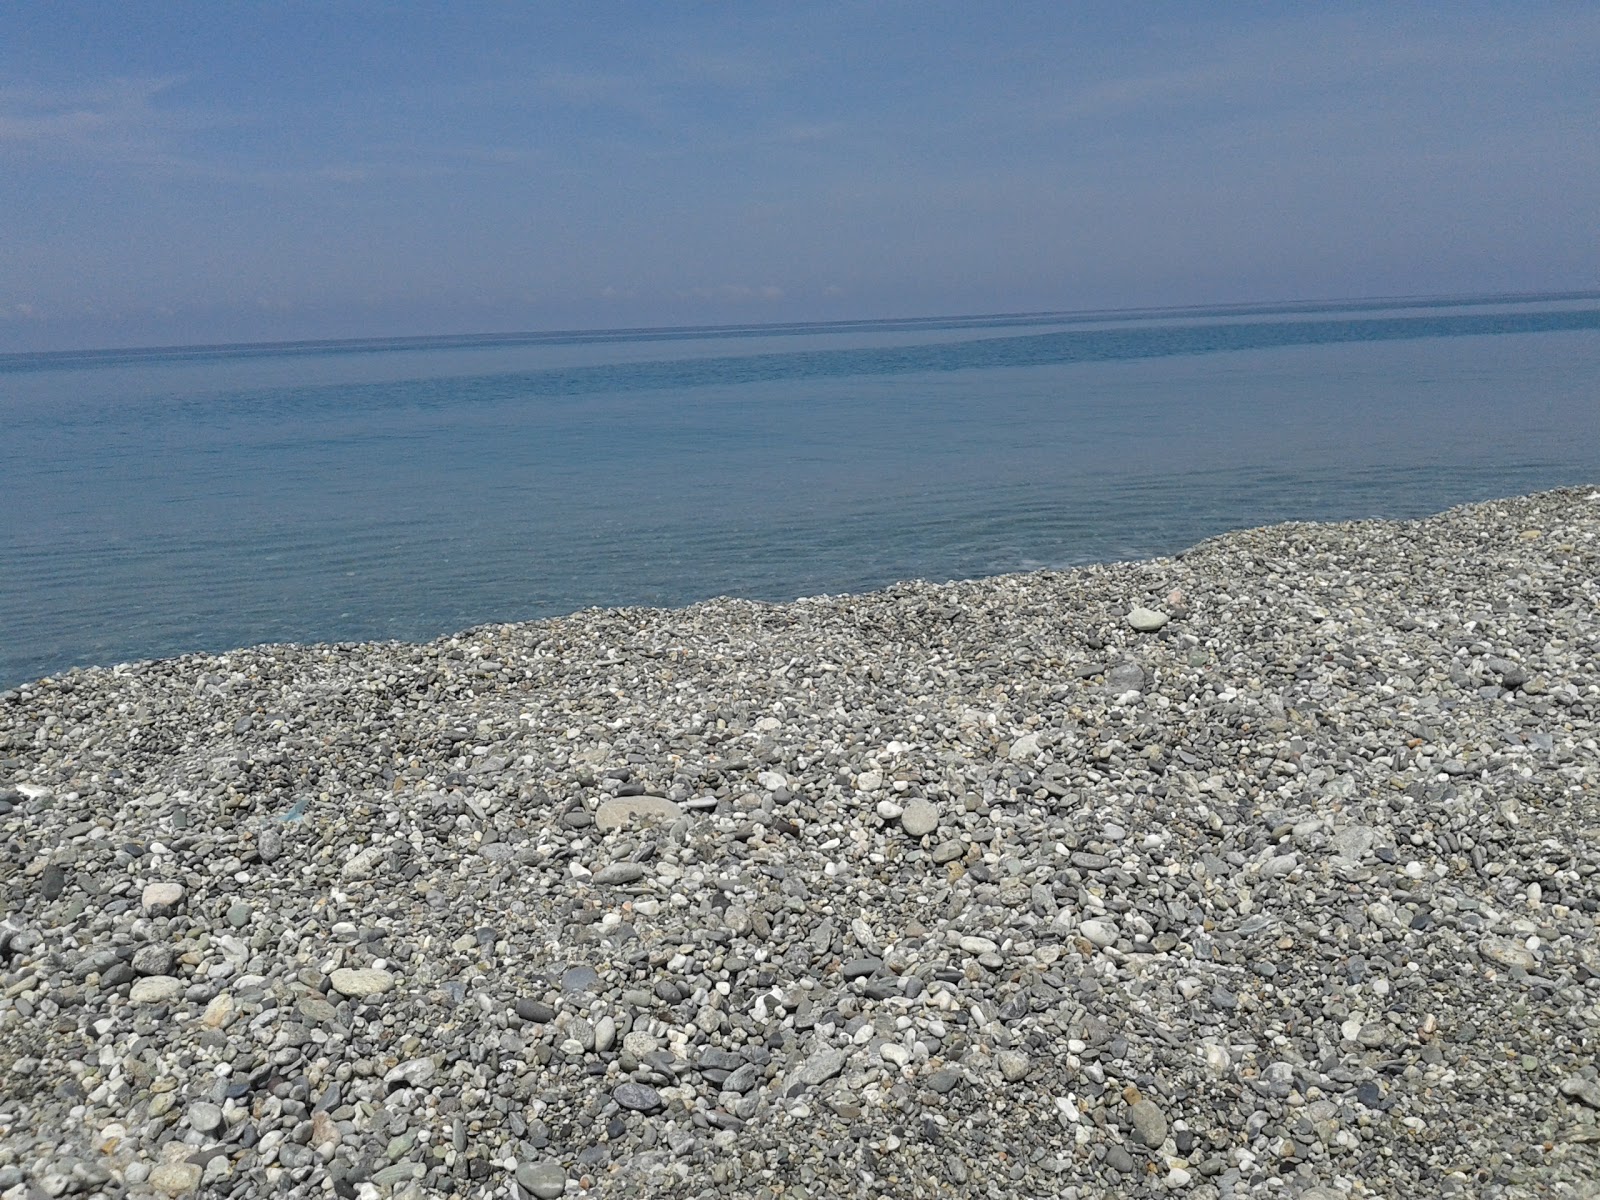 Fotografie cu Scaro-Reggio-Scornavacca-Vardano beach cu o suprafață de apa albastra